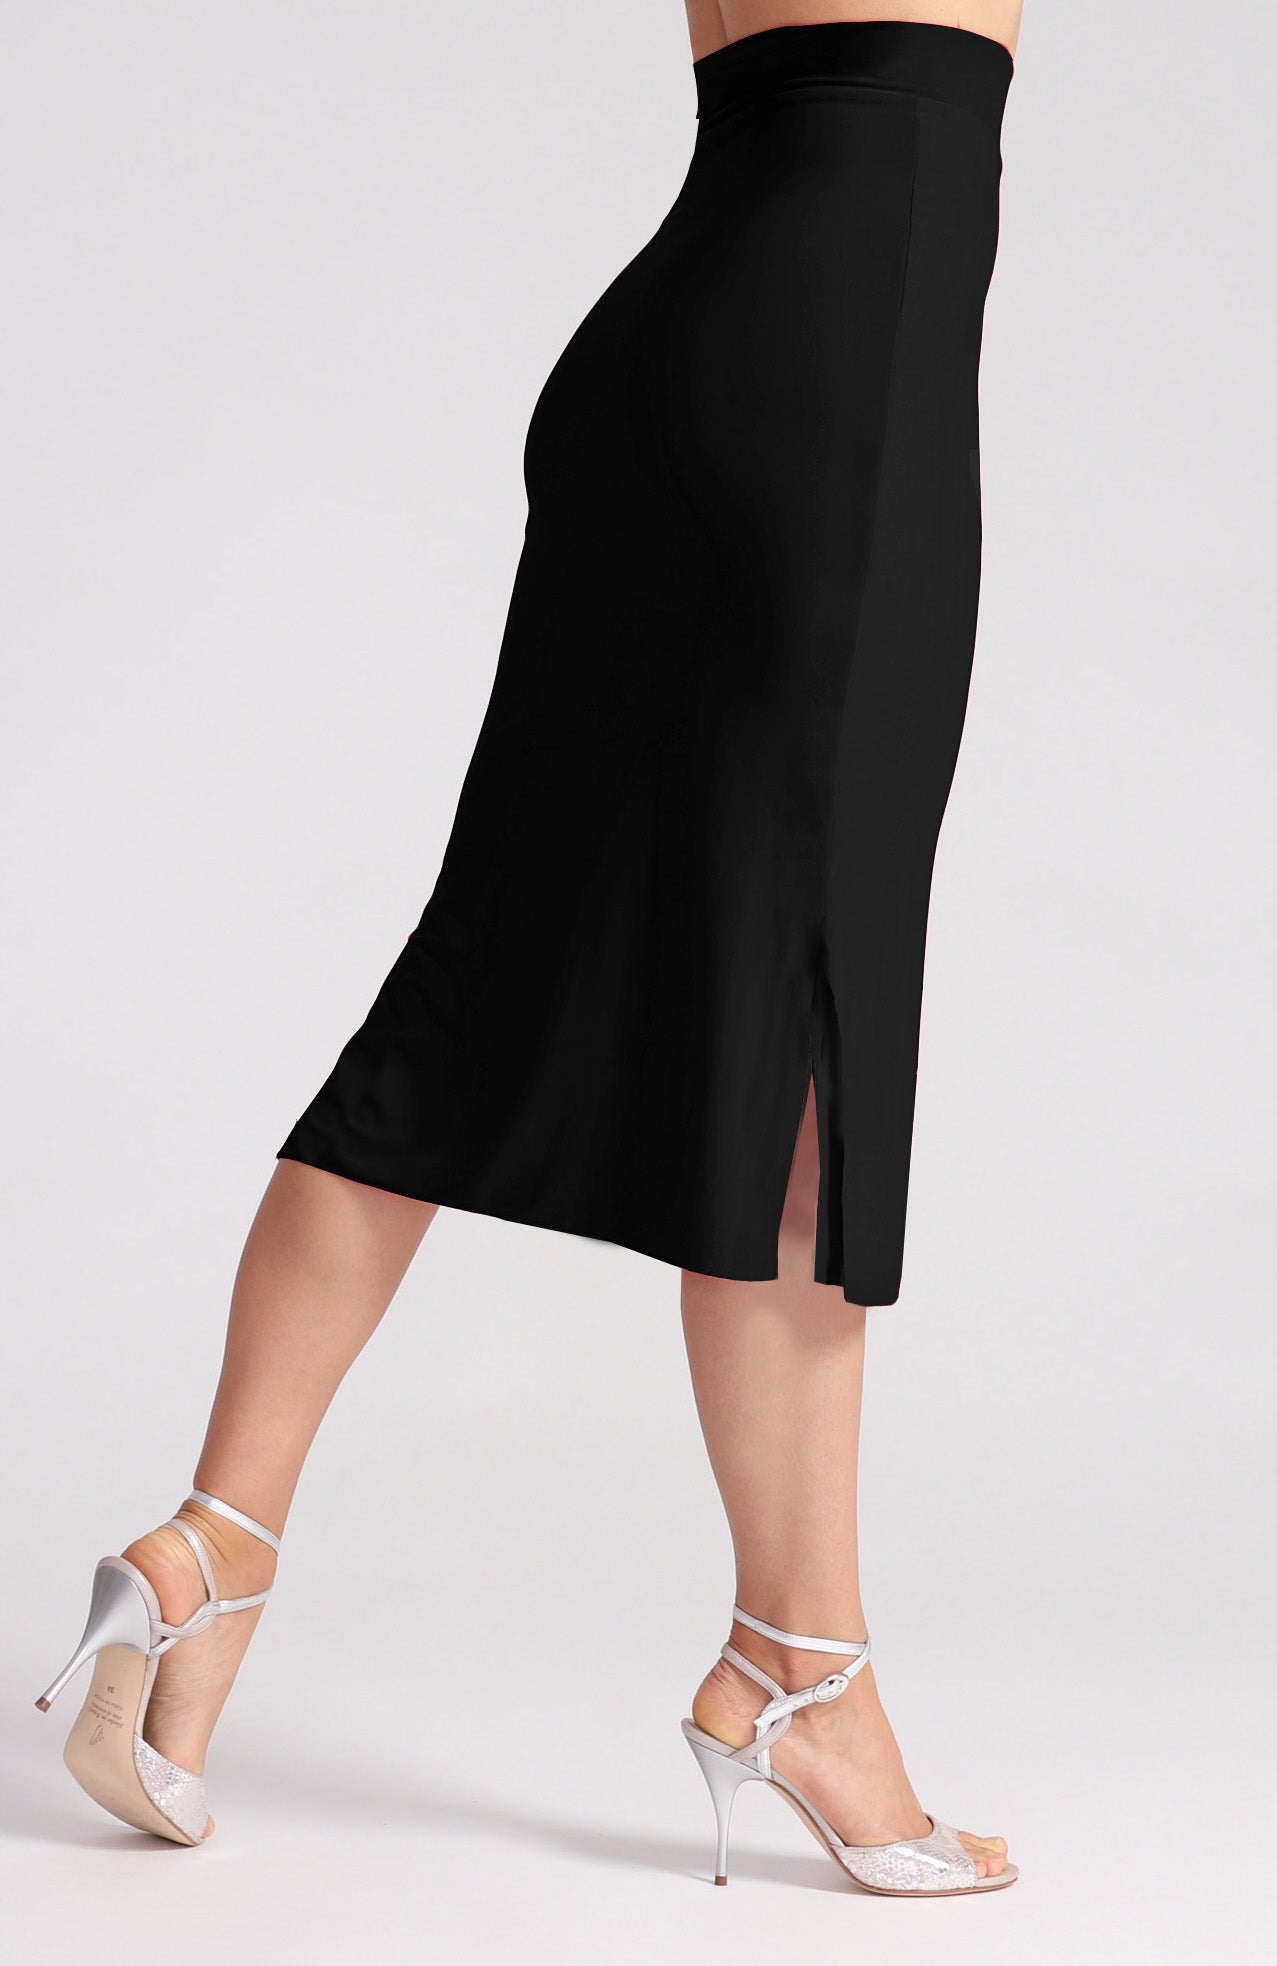 tango skirt with side slits